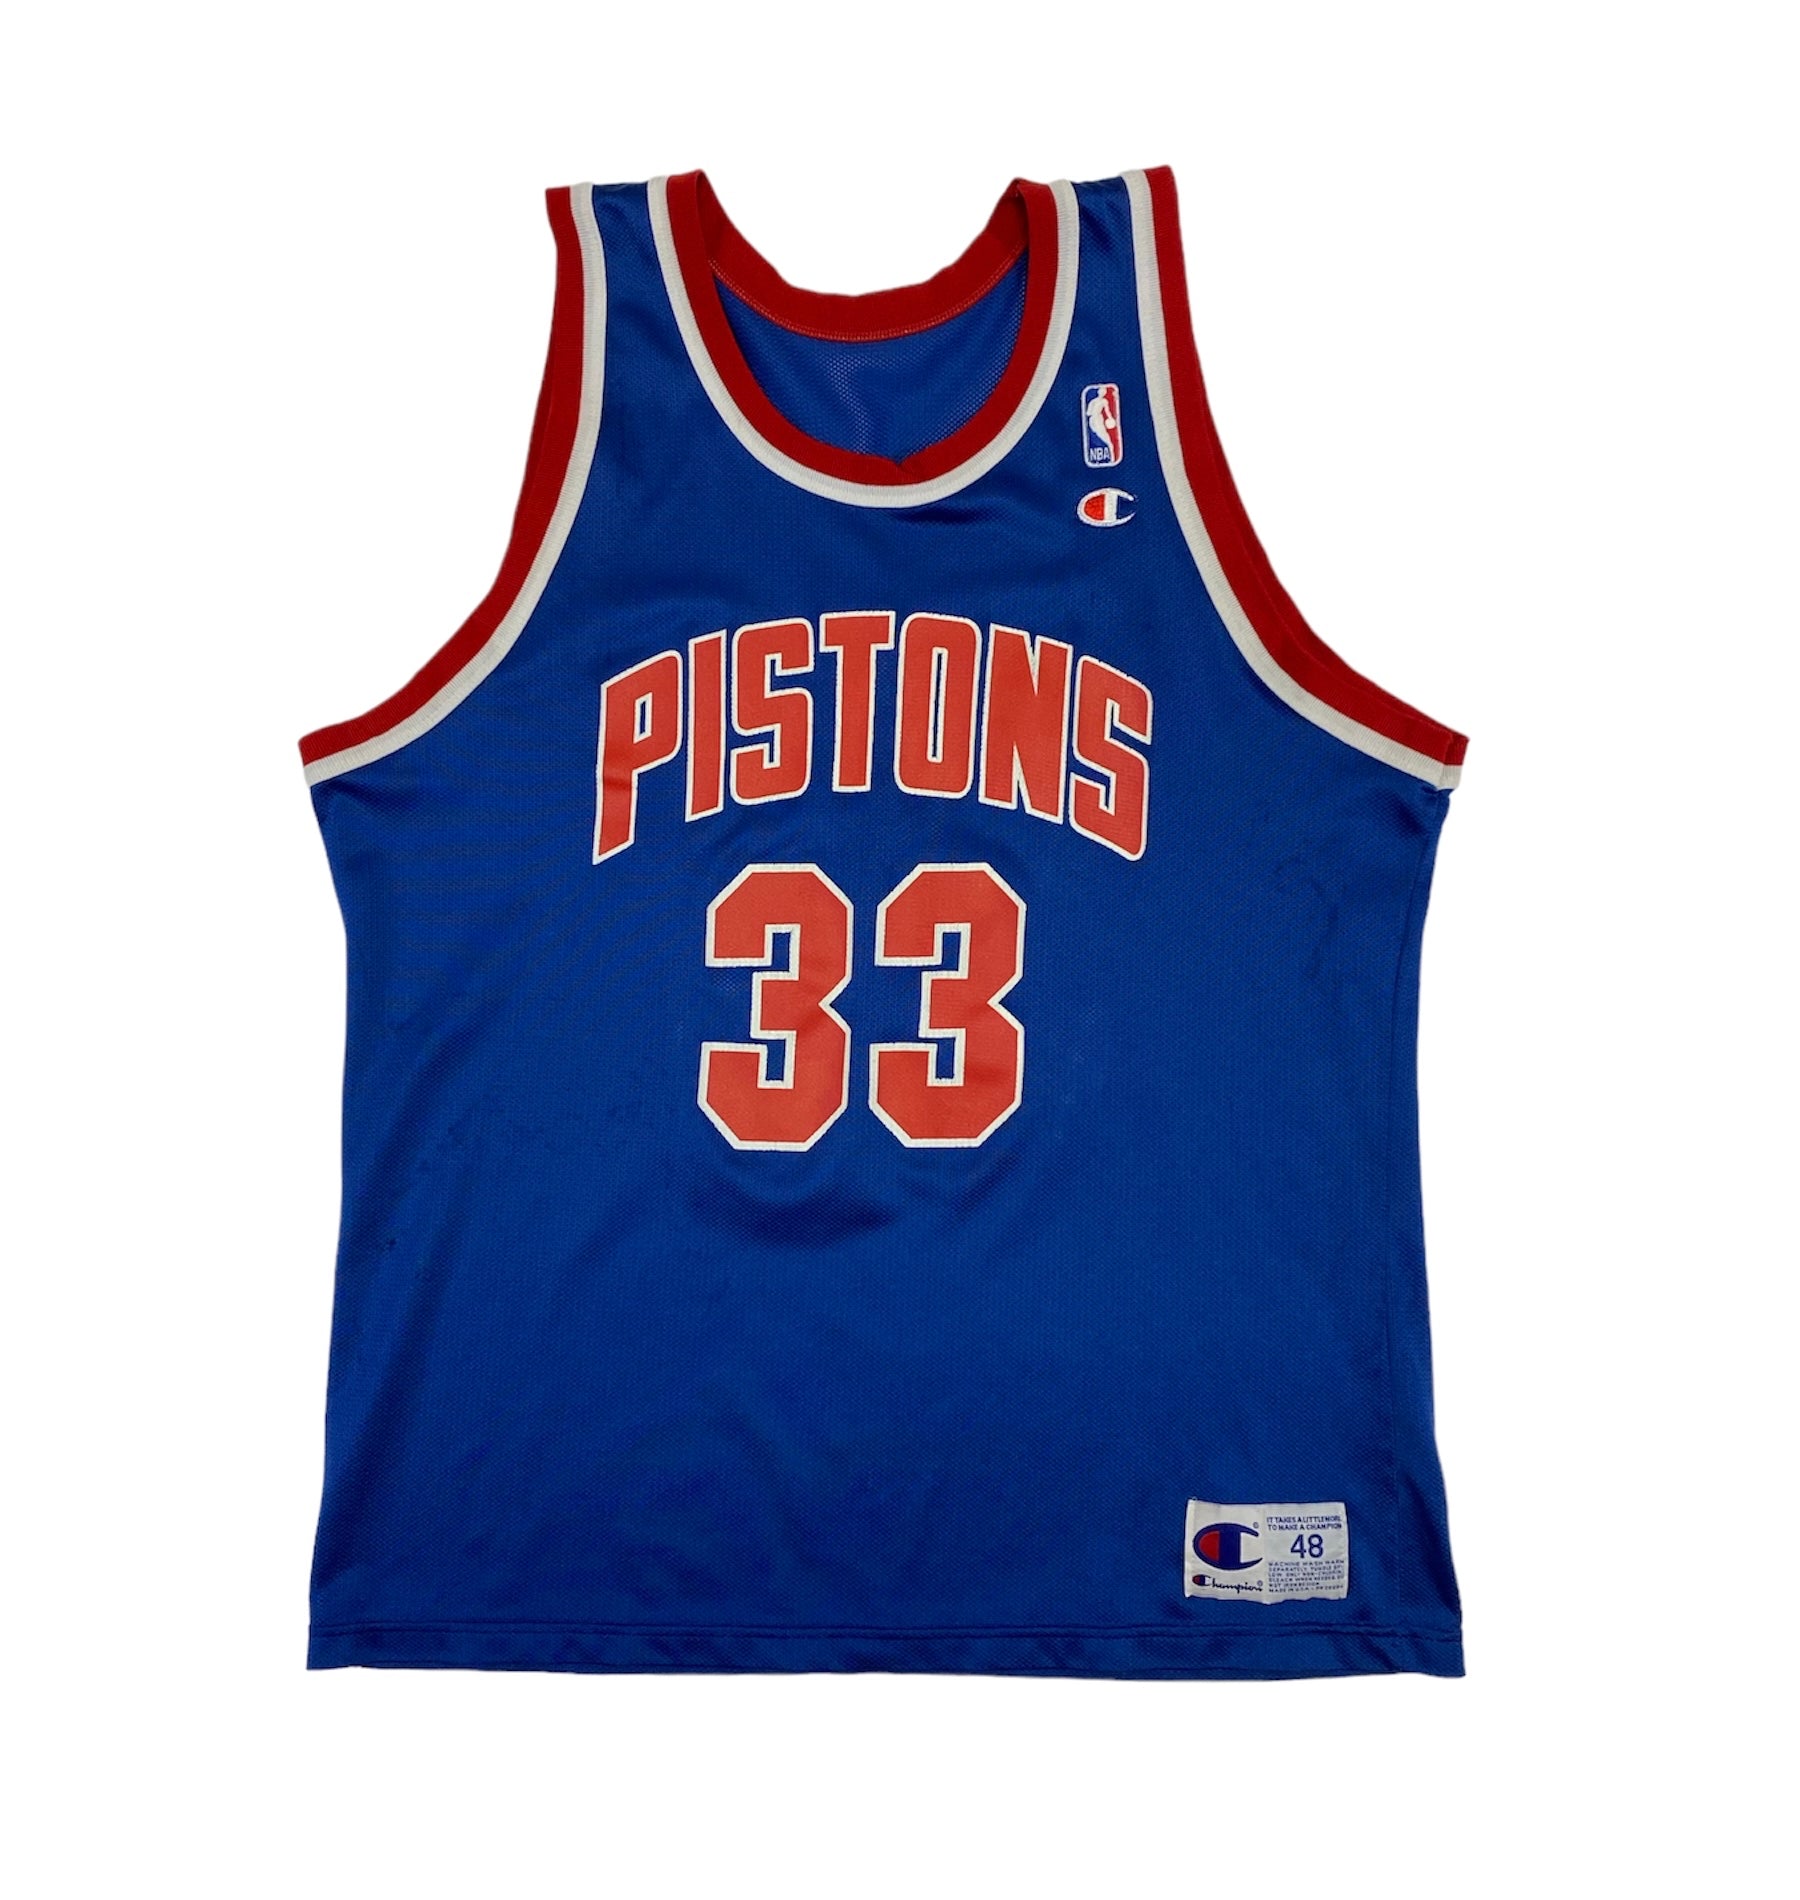 Red Detroit Pistons NBA Jerseys for sale